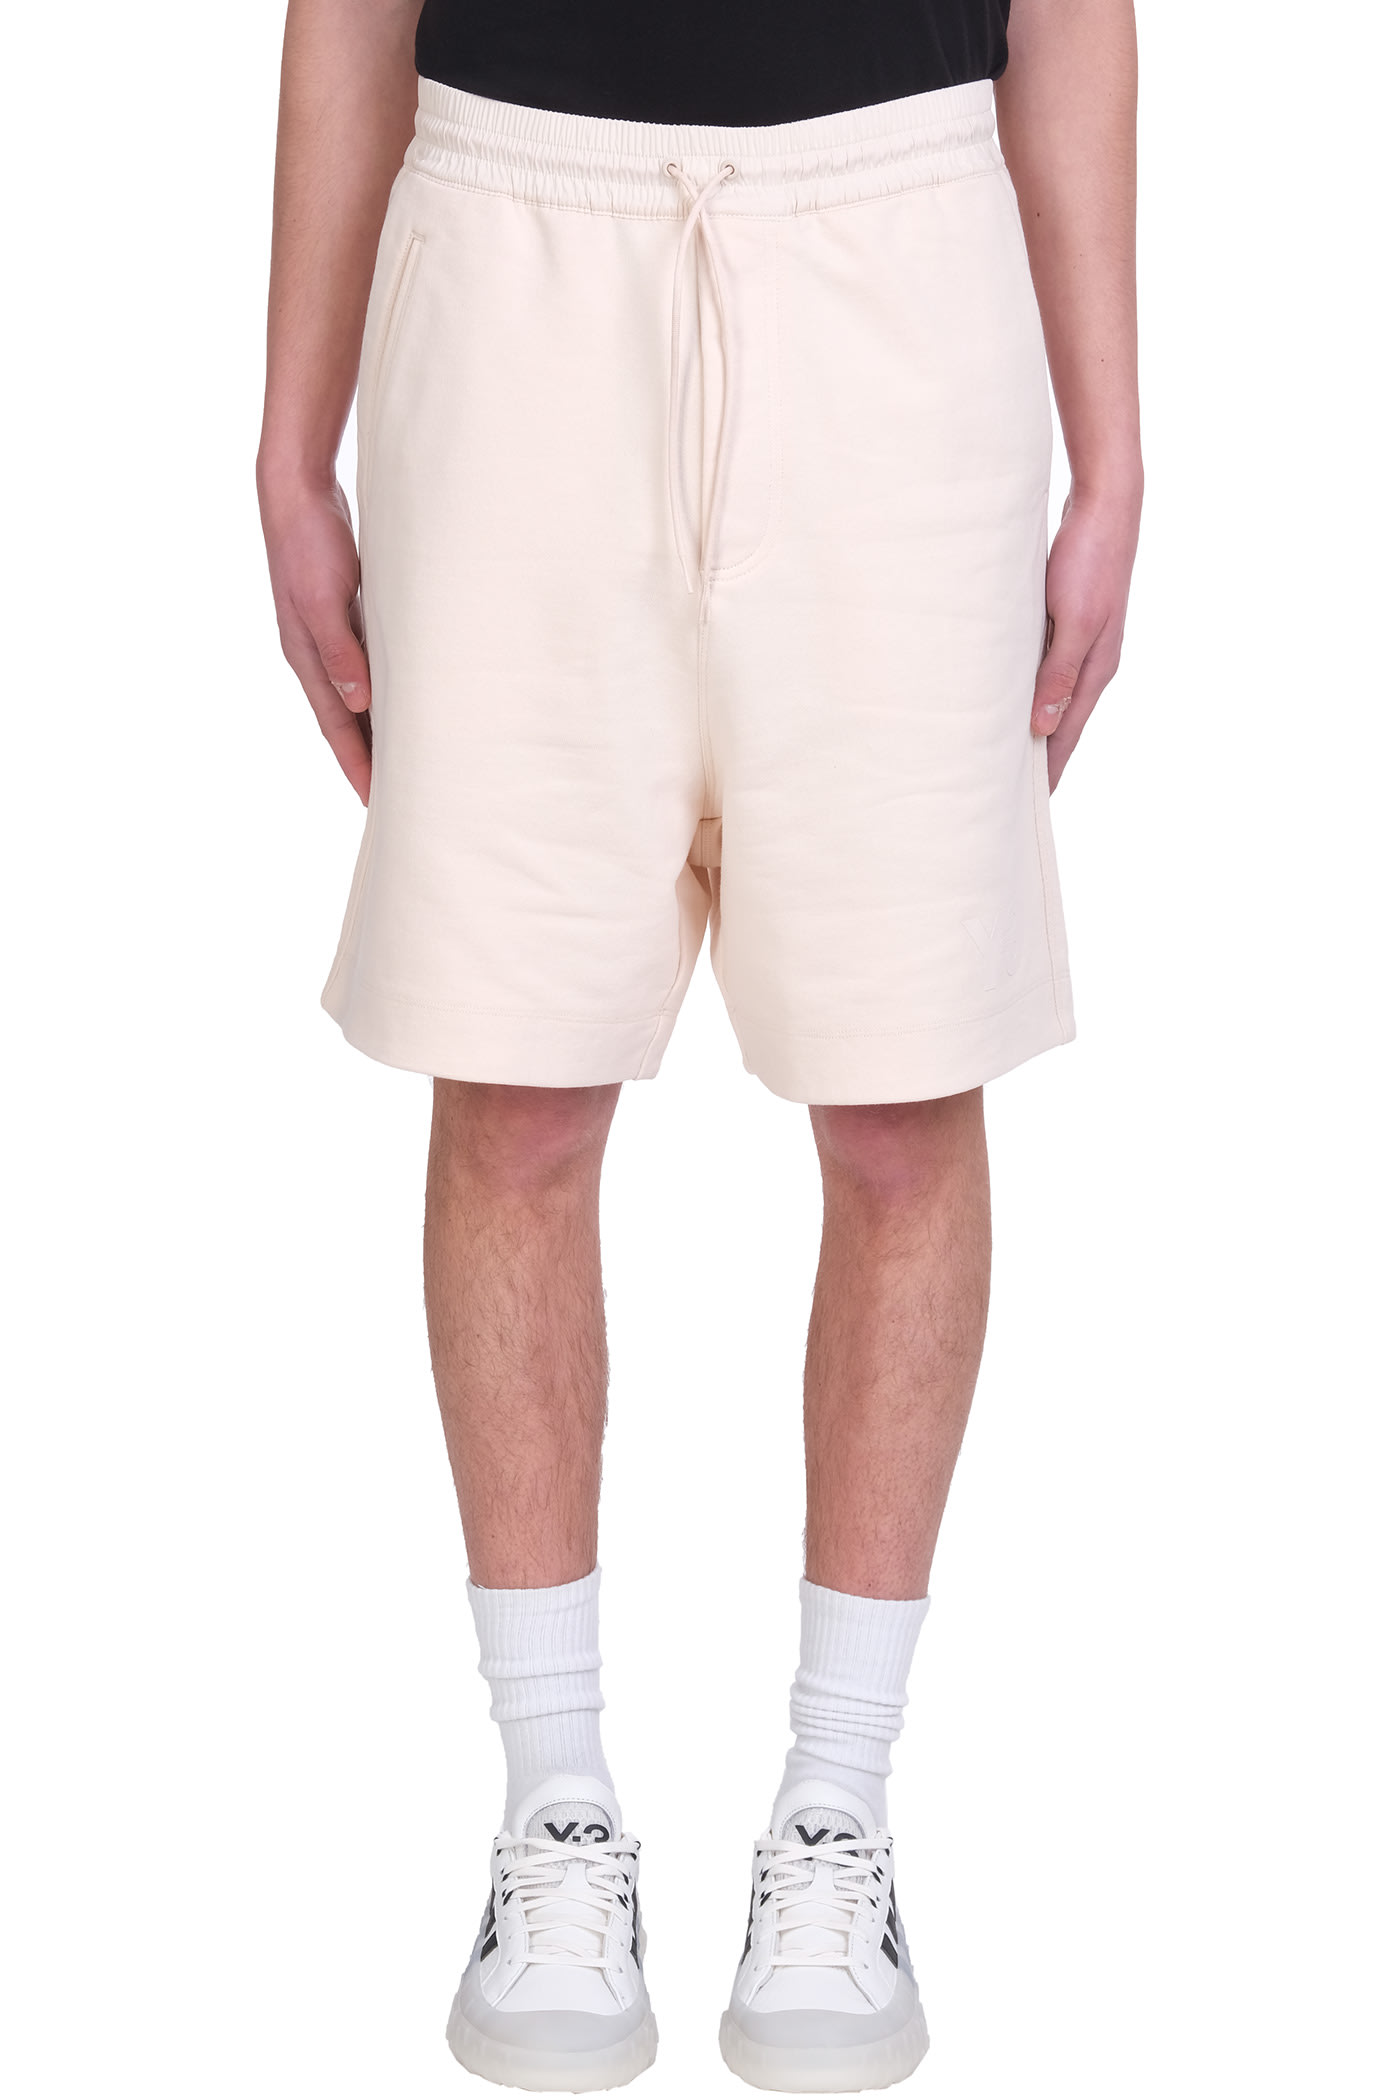 Y-3 Shorts In Powder Cotton